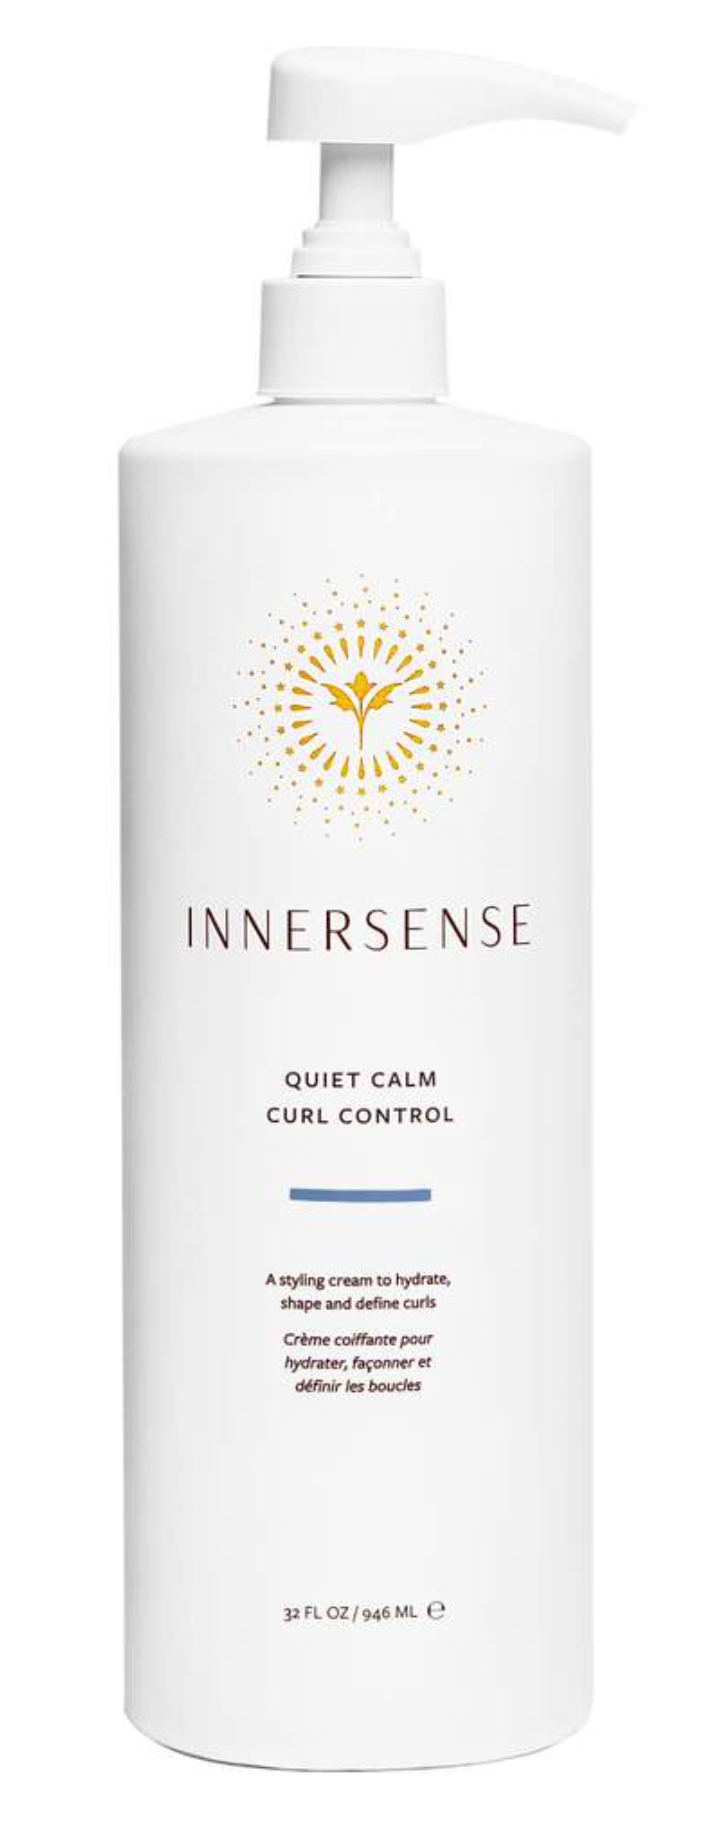 Innersense quiet calm curl control 32 oz. styling cream